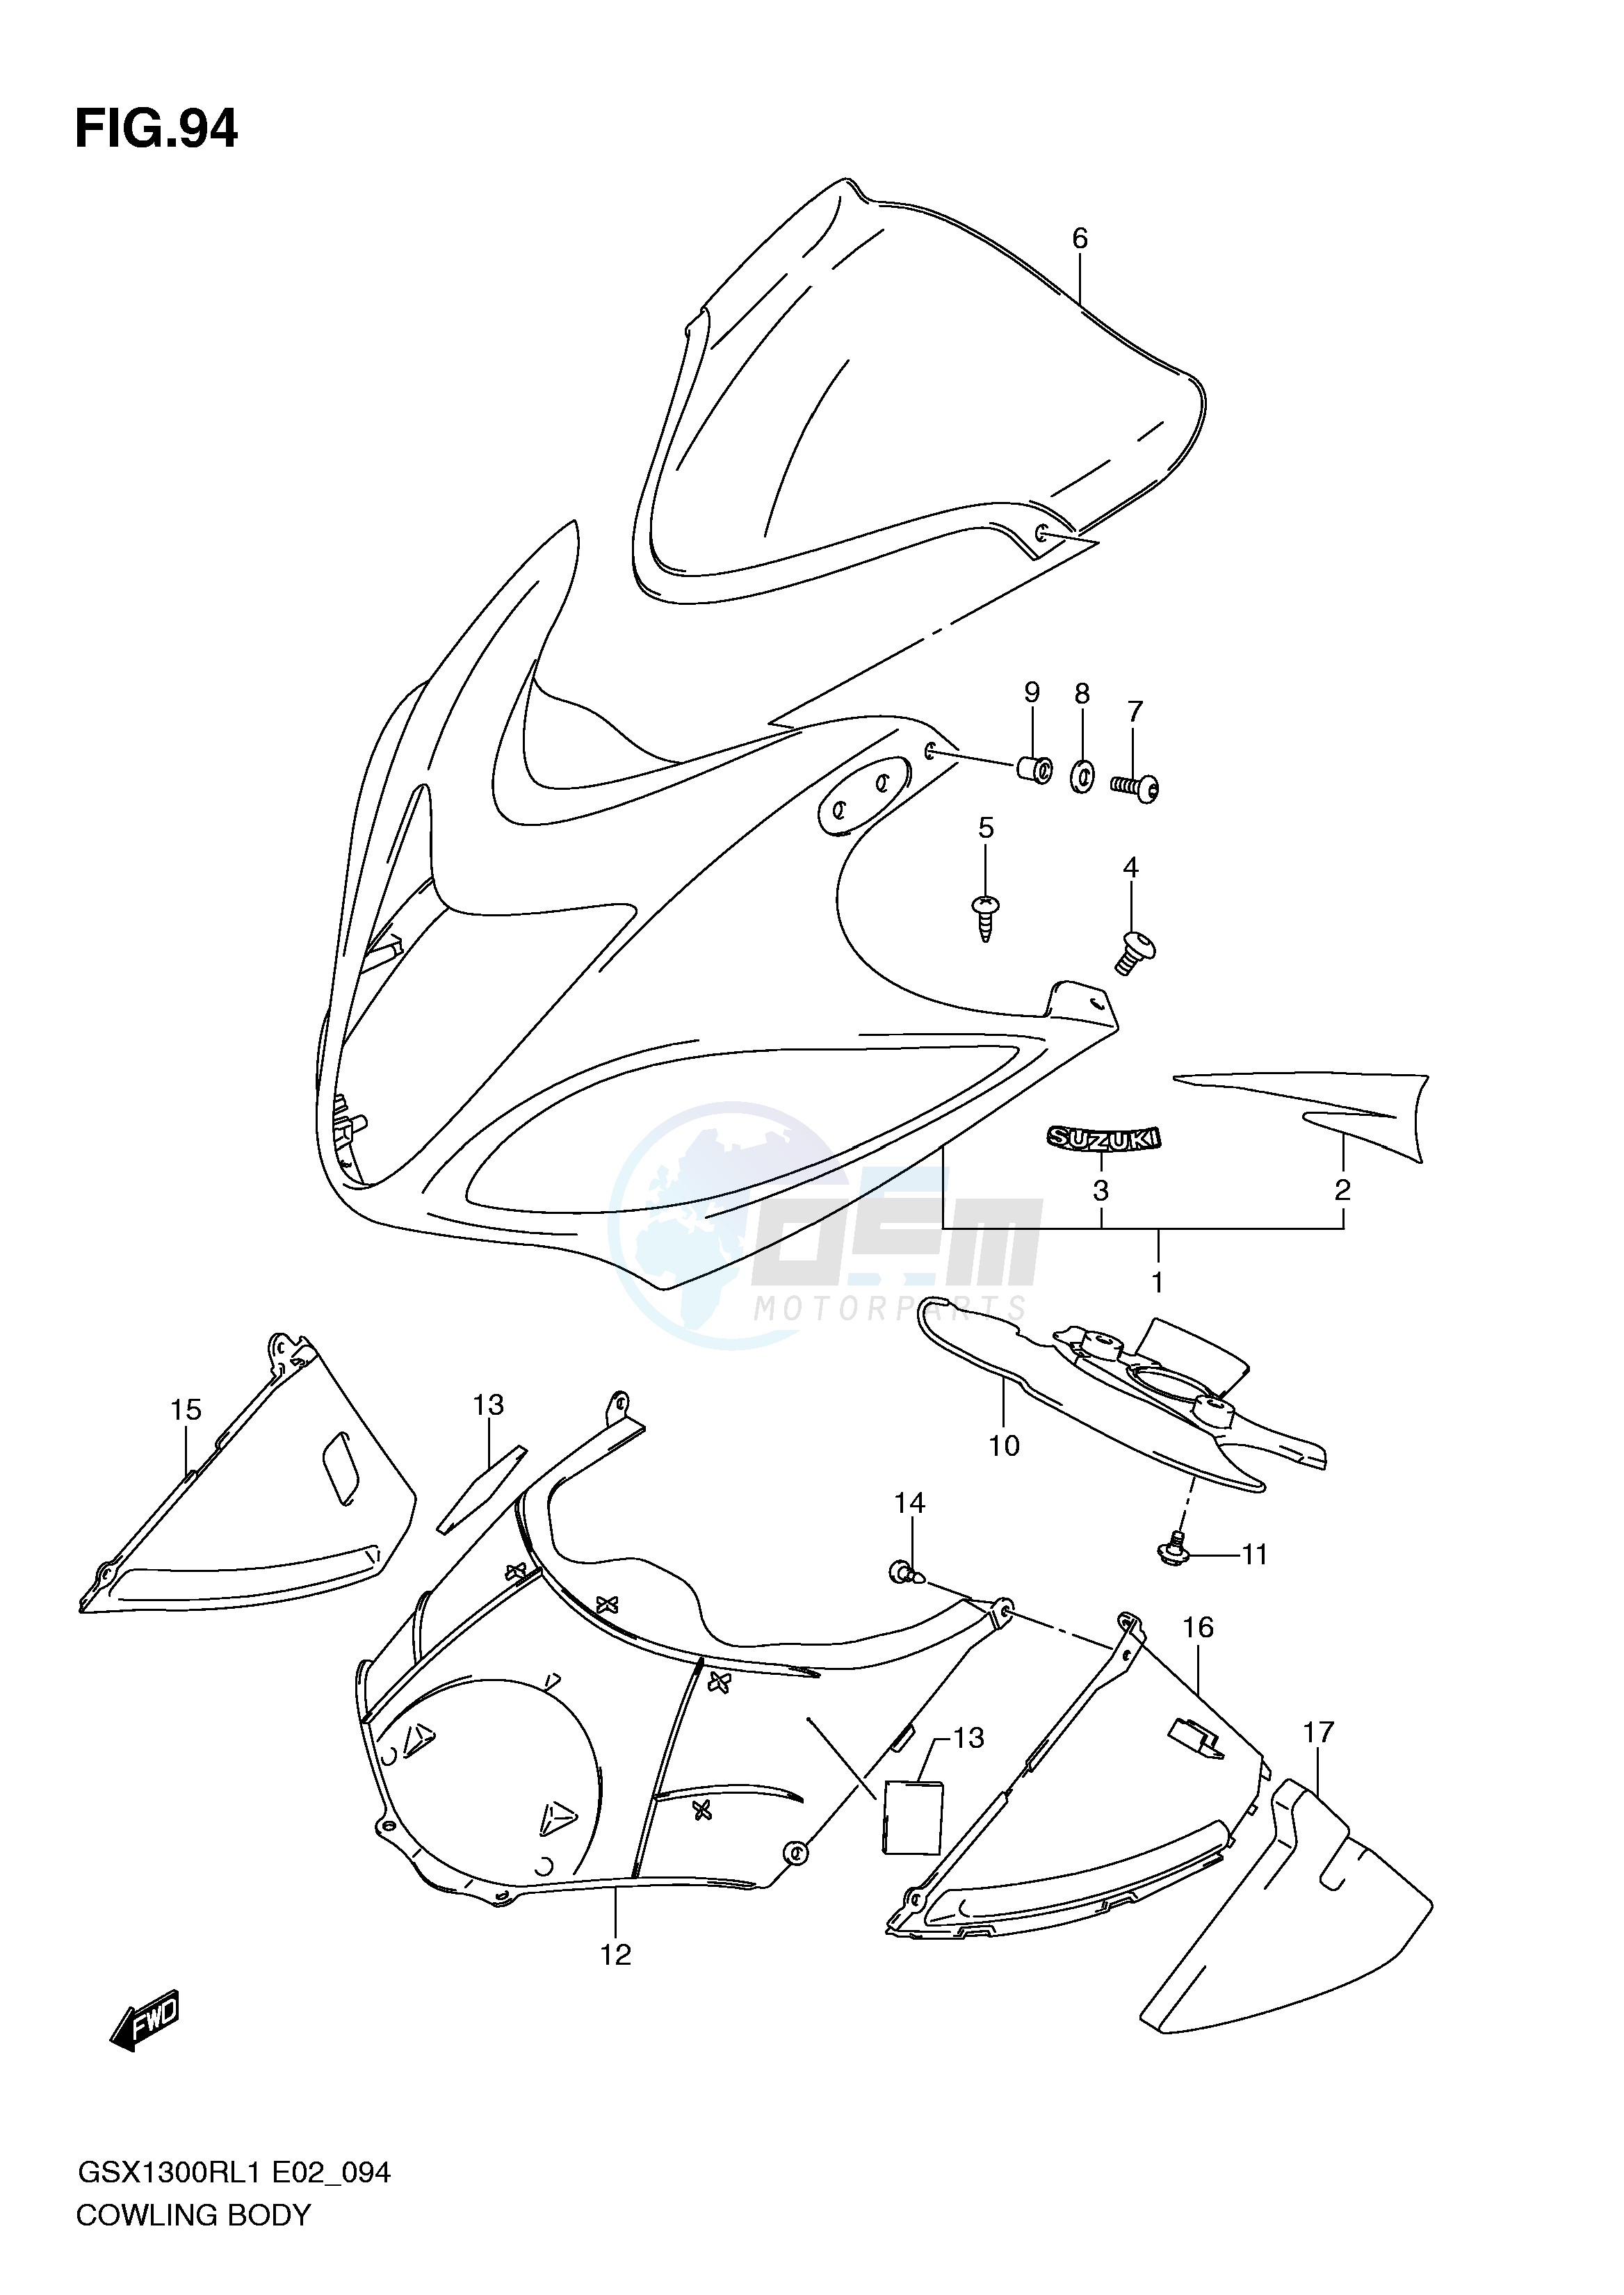 COWLING BODY (GSX1300RL1 E24) blueprint